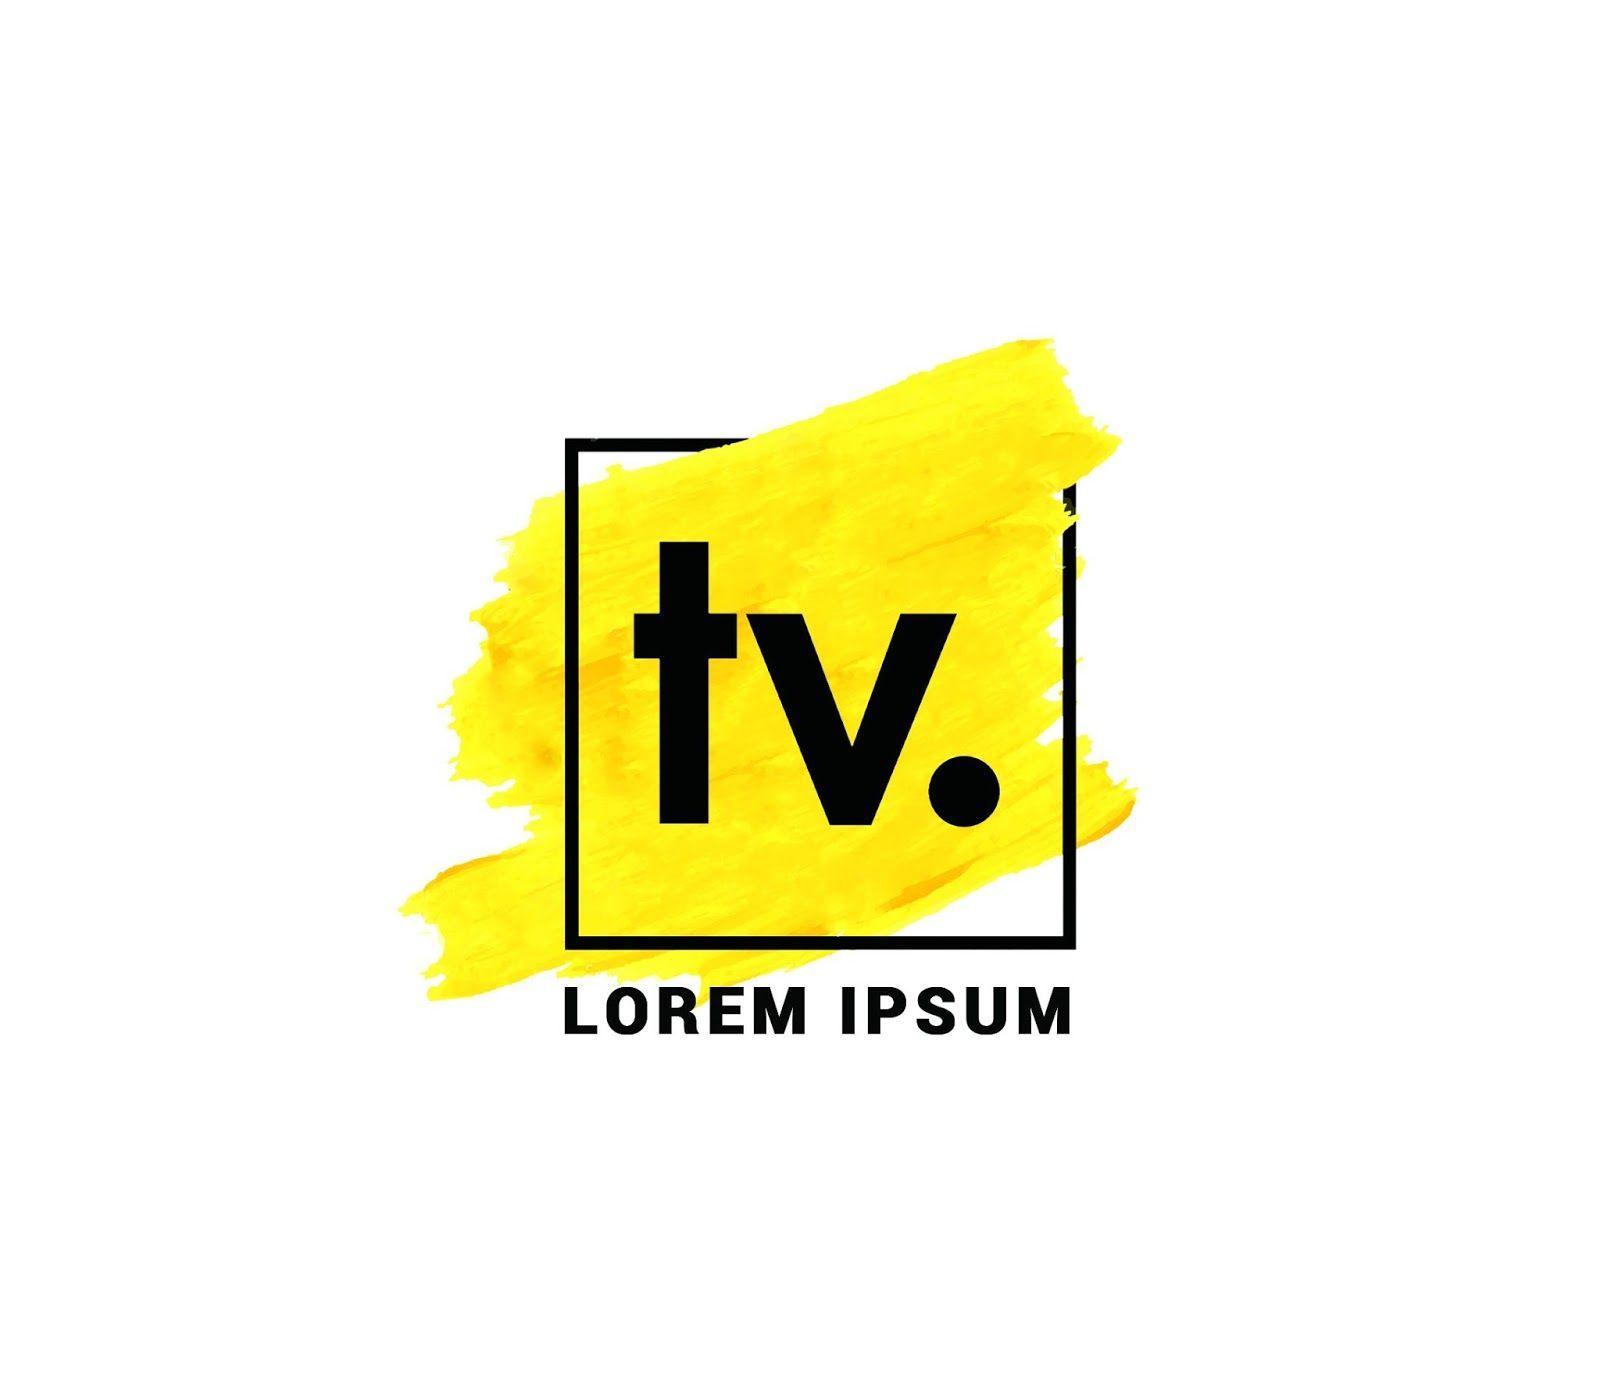 TV Channel Logo - TV Channel Logo Design For Inspiration Download Free PSD. visiting